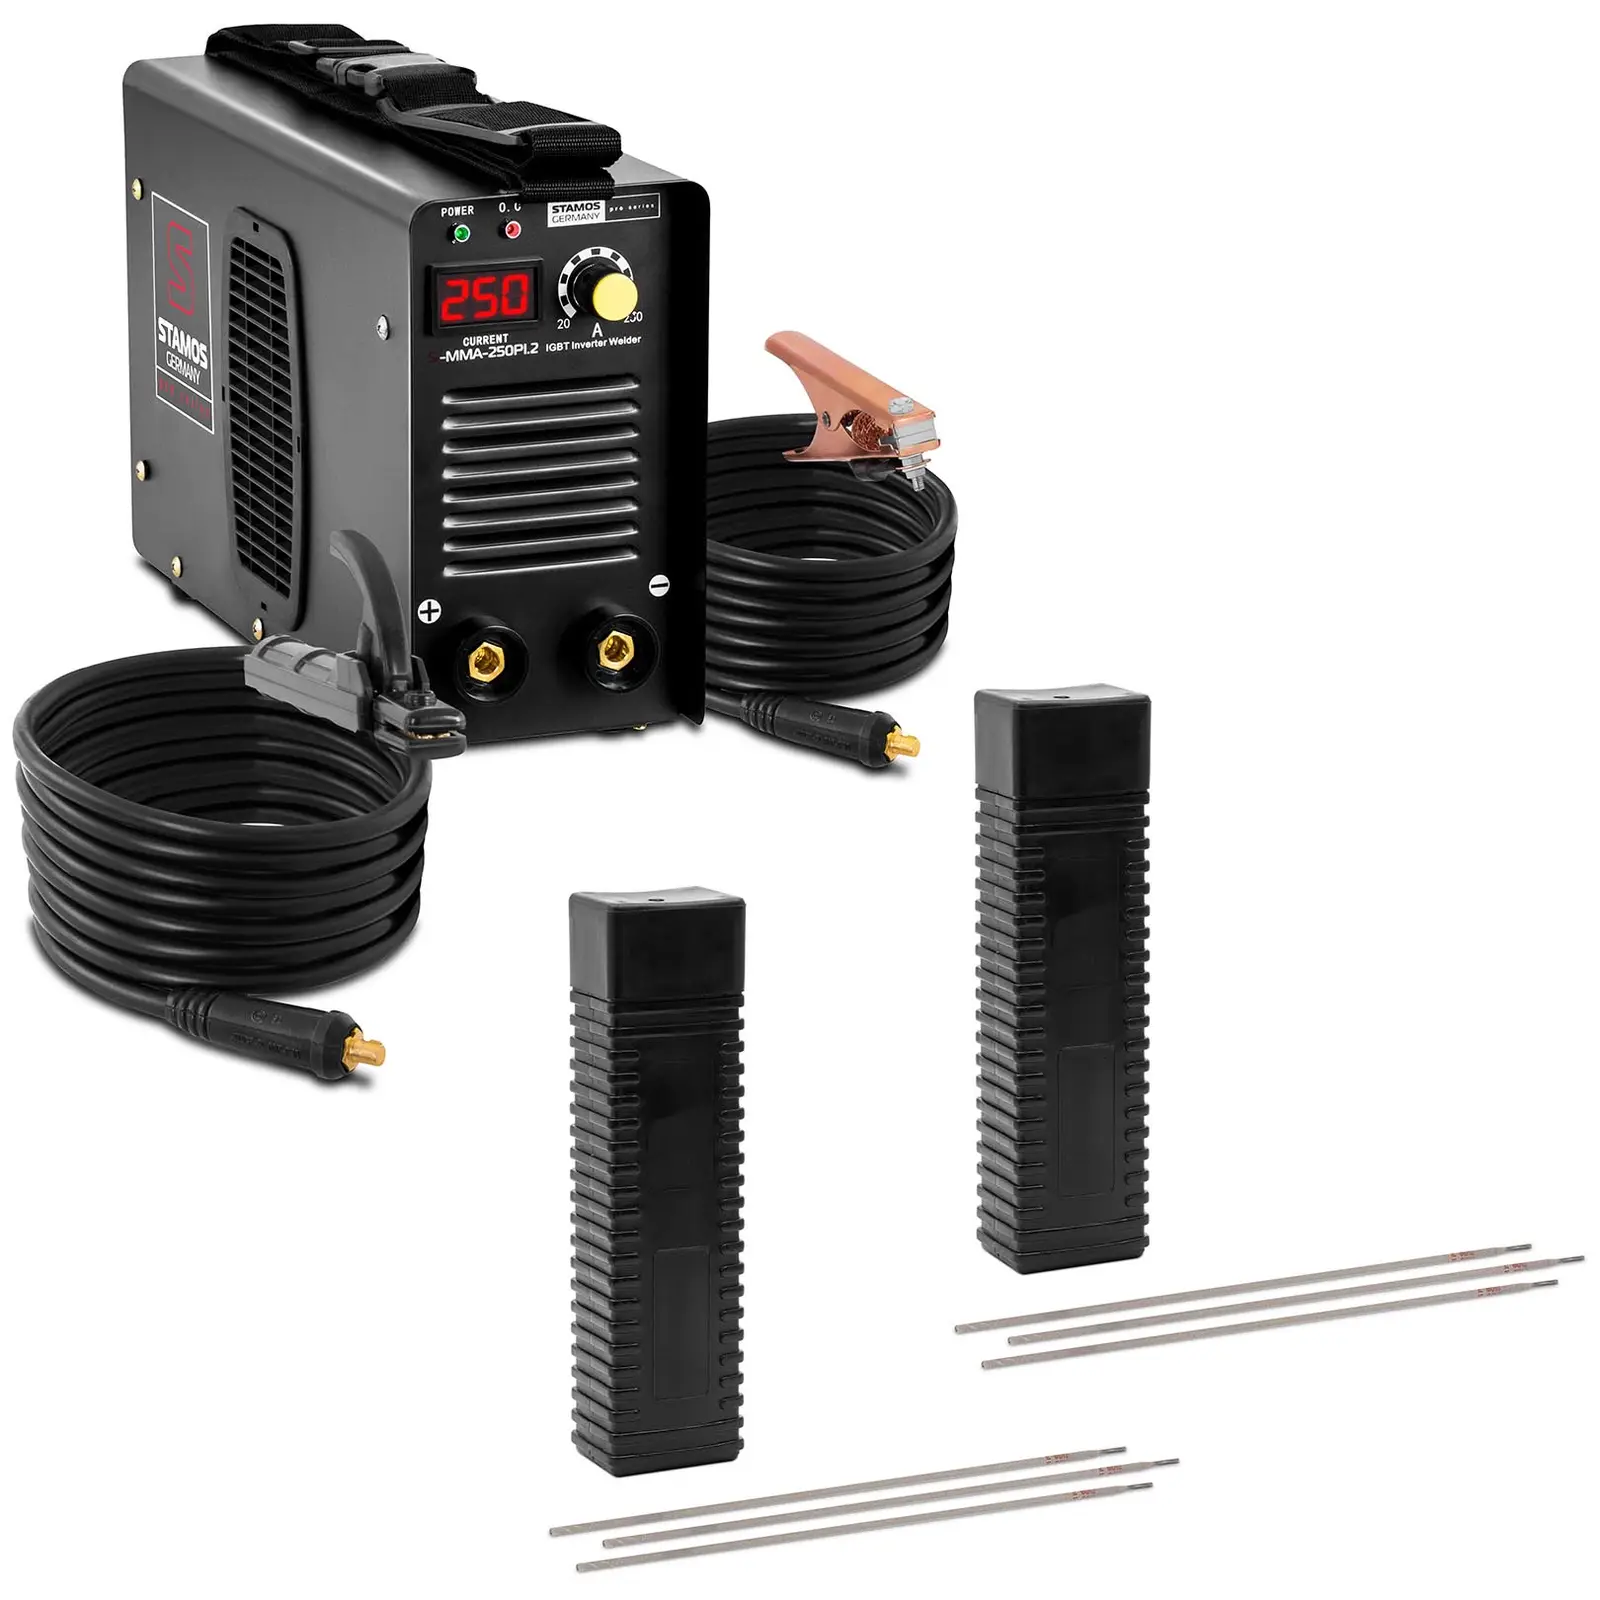 Sveisesett Elektrodesveiser - 250 A - 8 m kabel - 60 % Duty Cycle - Elektroder E6013 - Rutil cellulose - Ø 3,2 x 350 mm - 2 x 5 kg